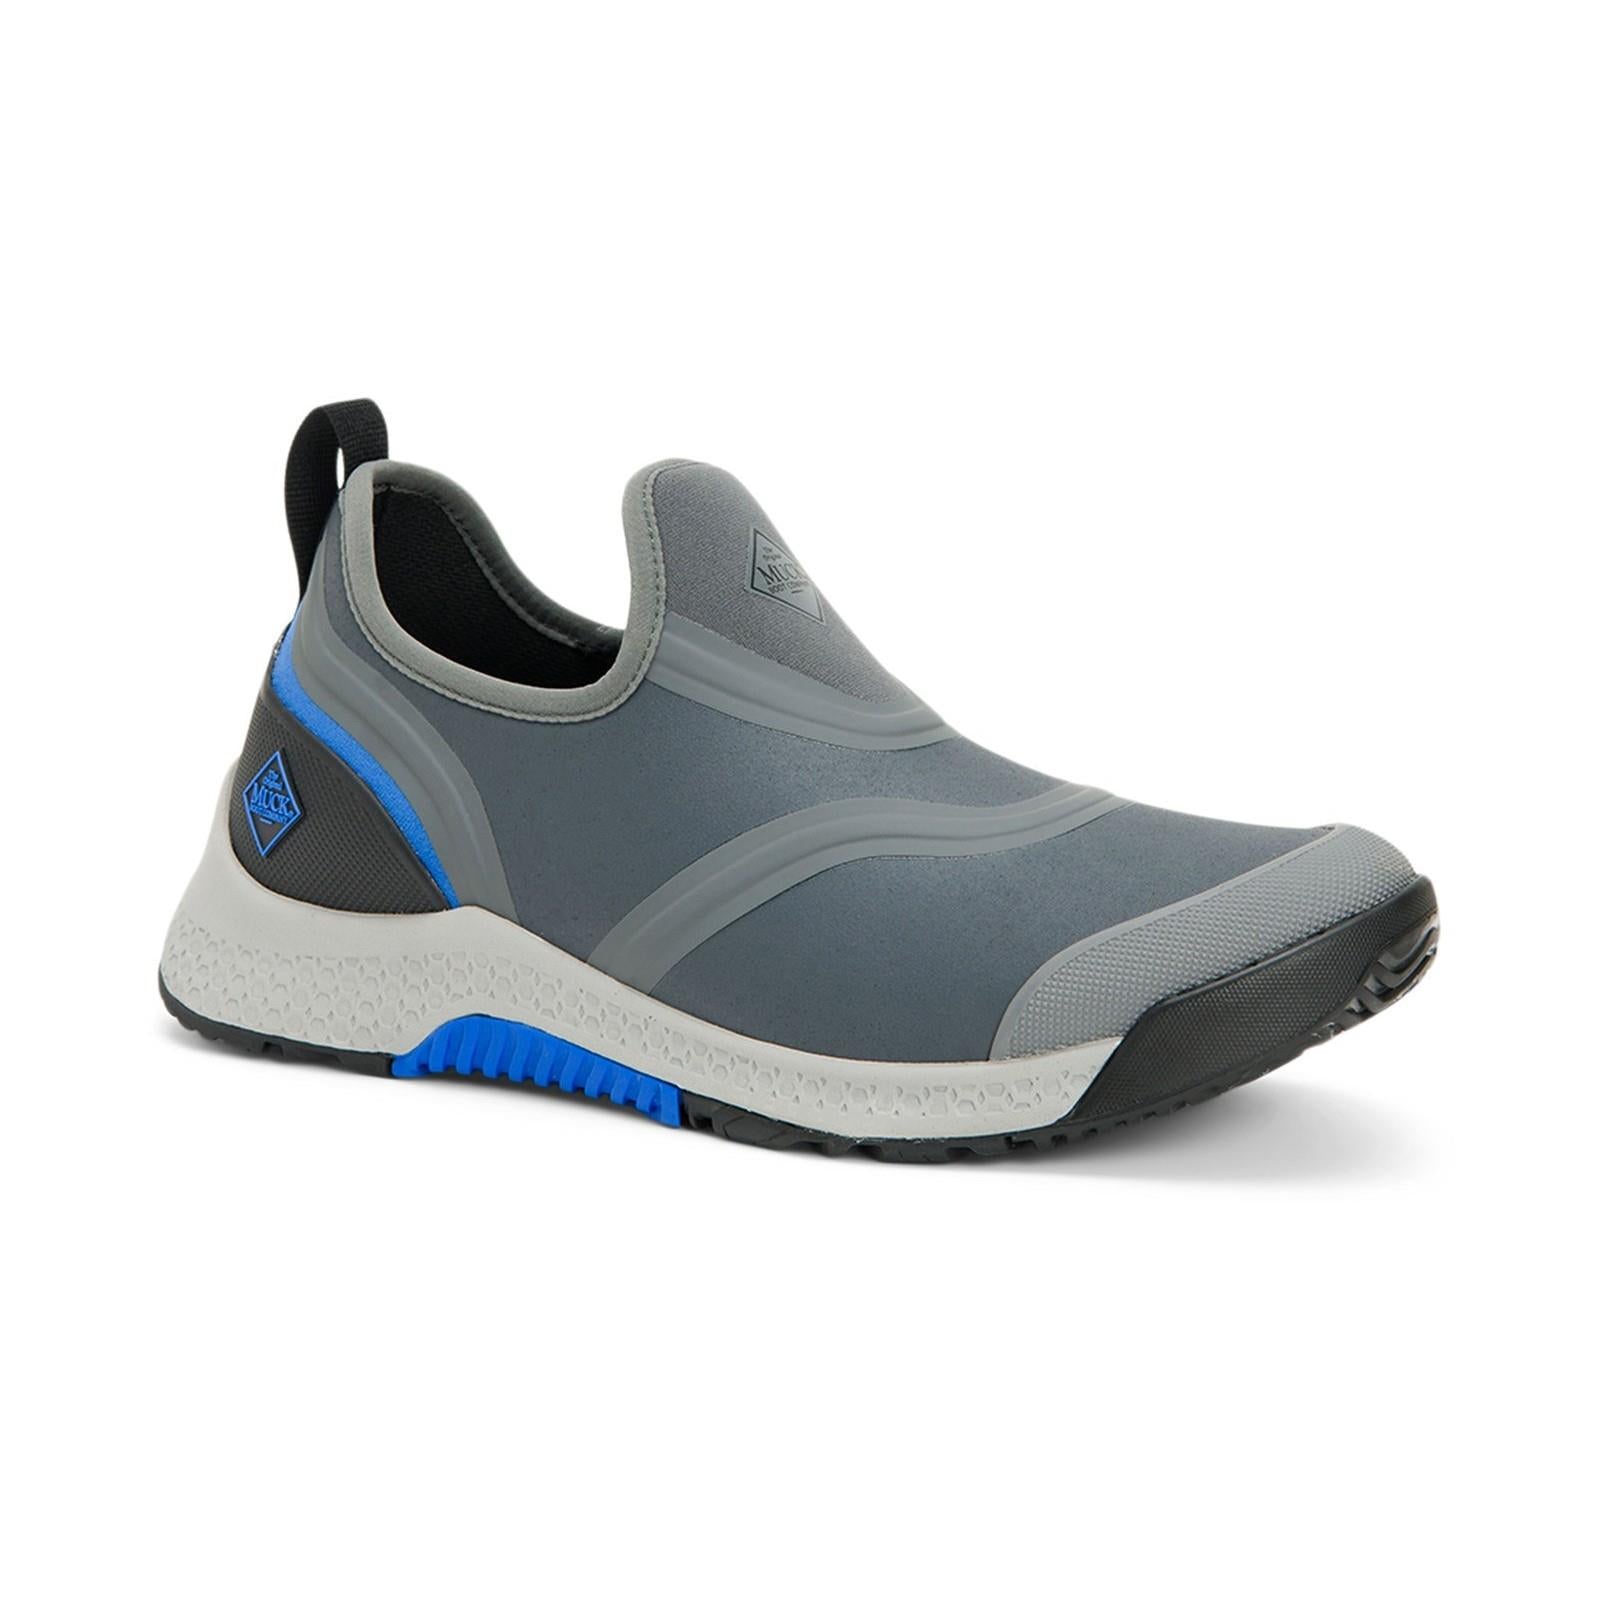 Muck Boots Outscape Low grey lightweight waterproof slip on garden shoes